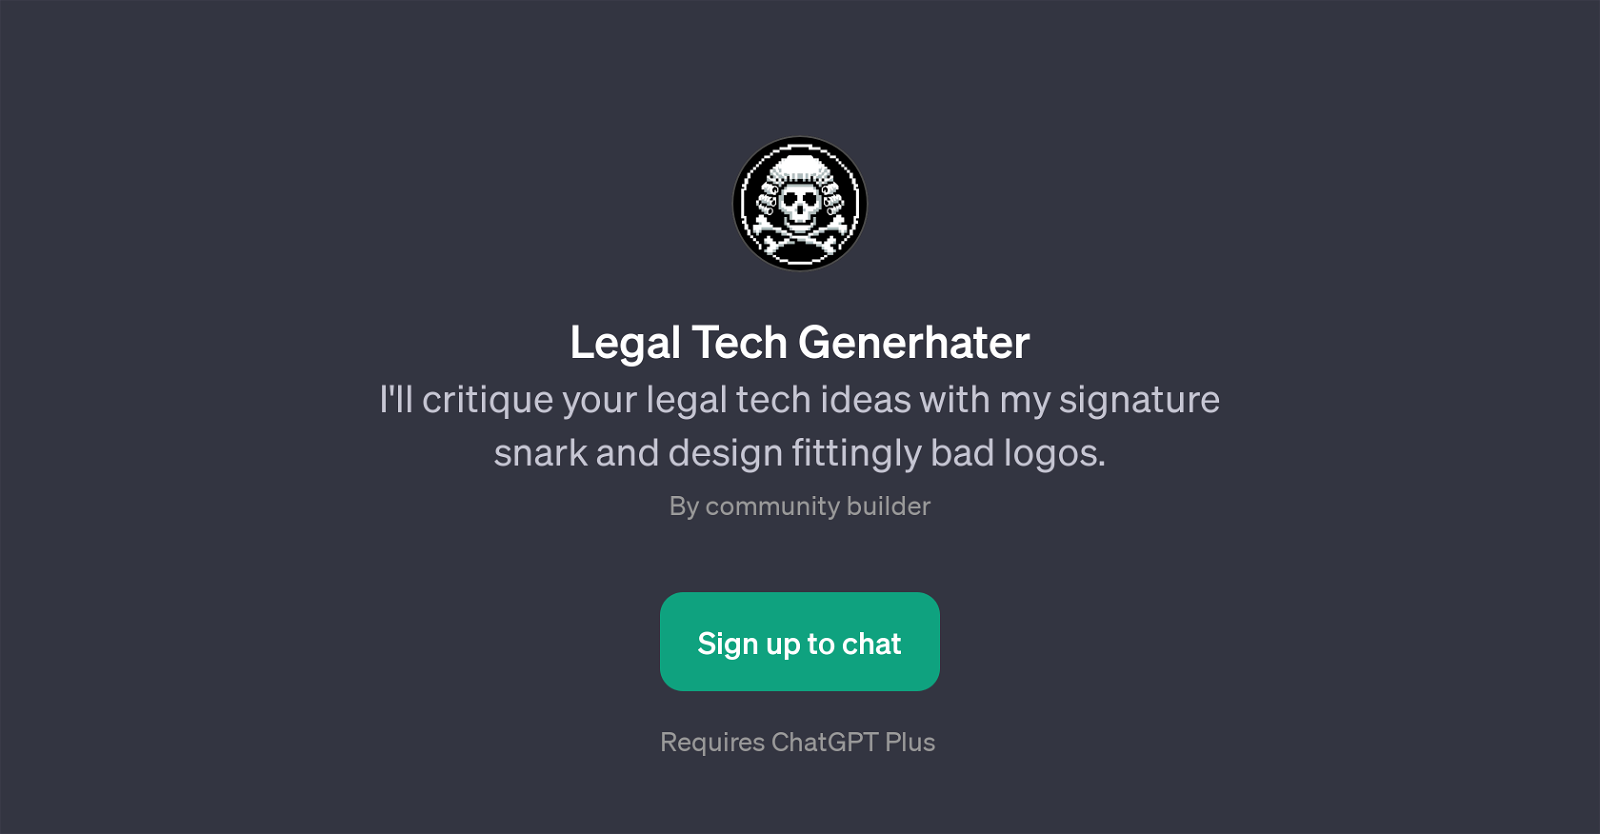 Legal Tech Generhater website